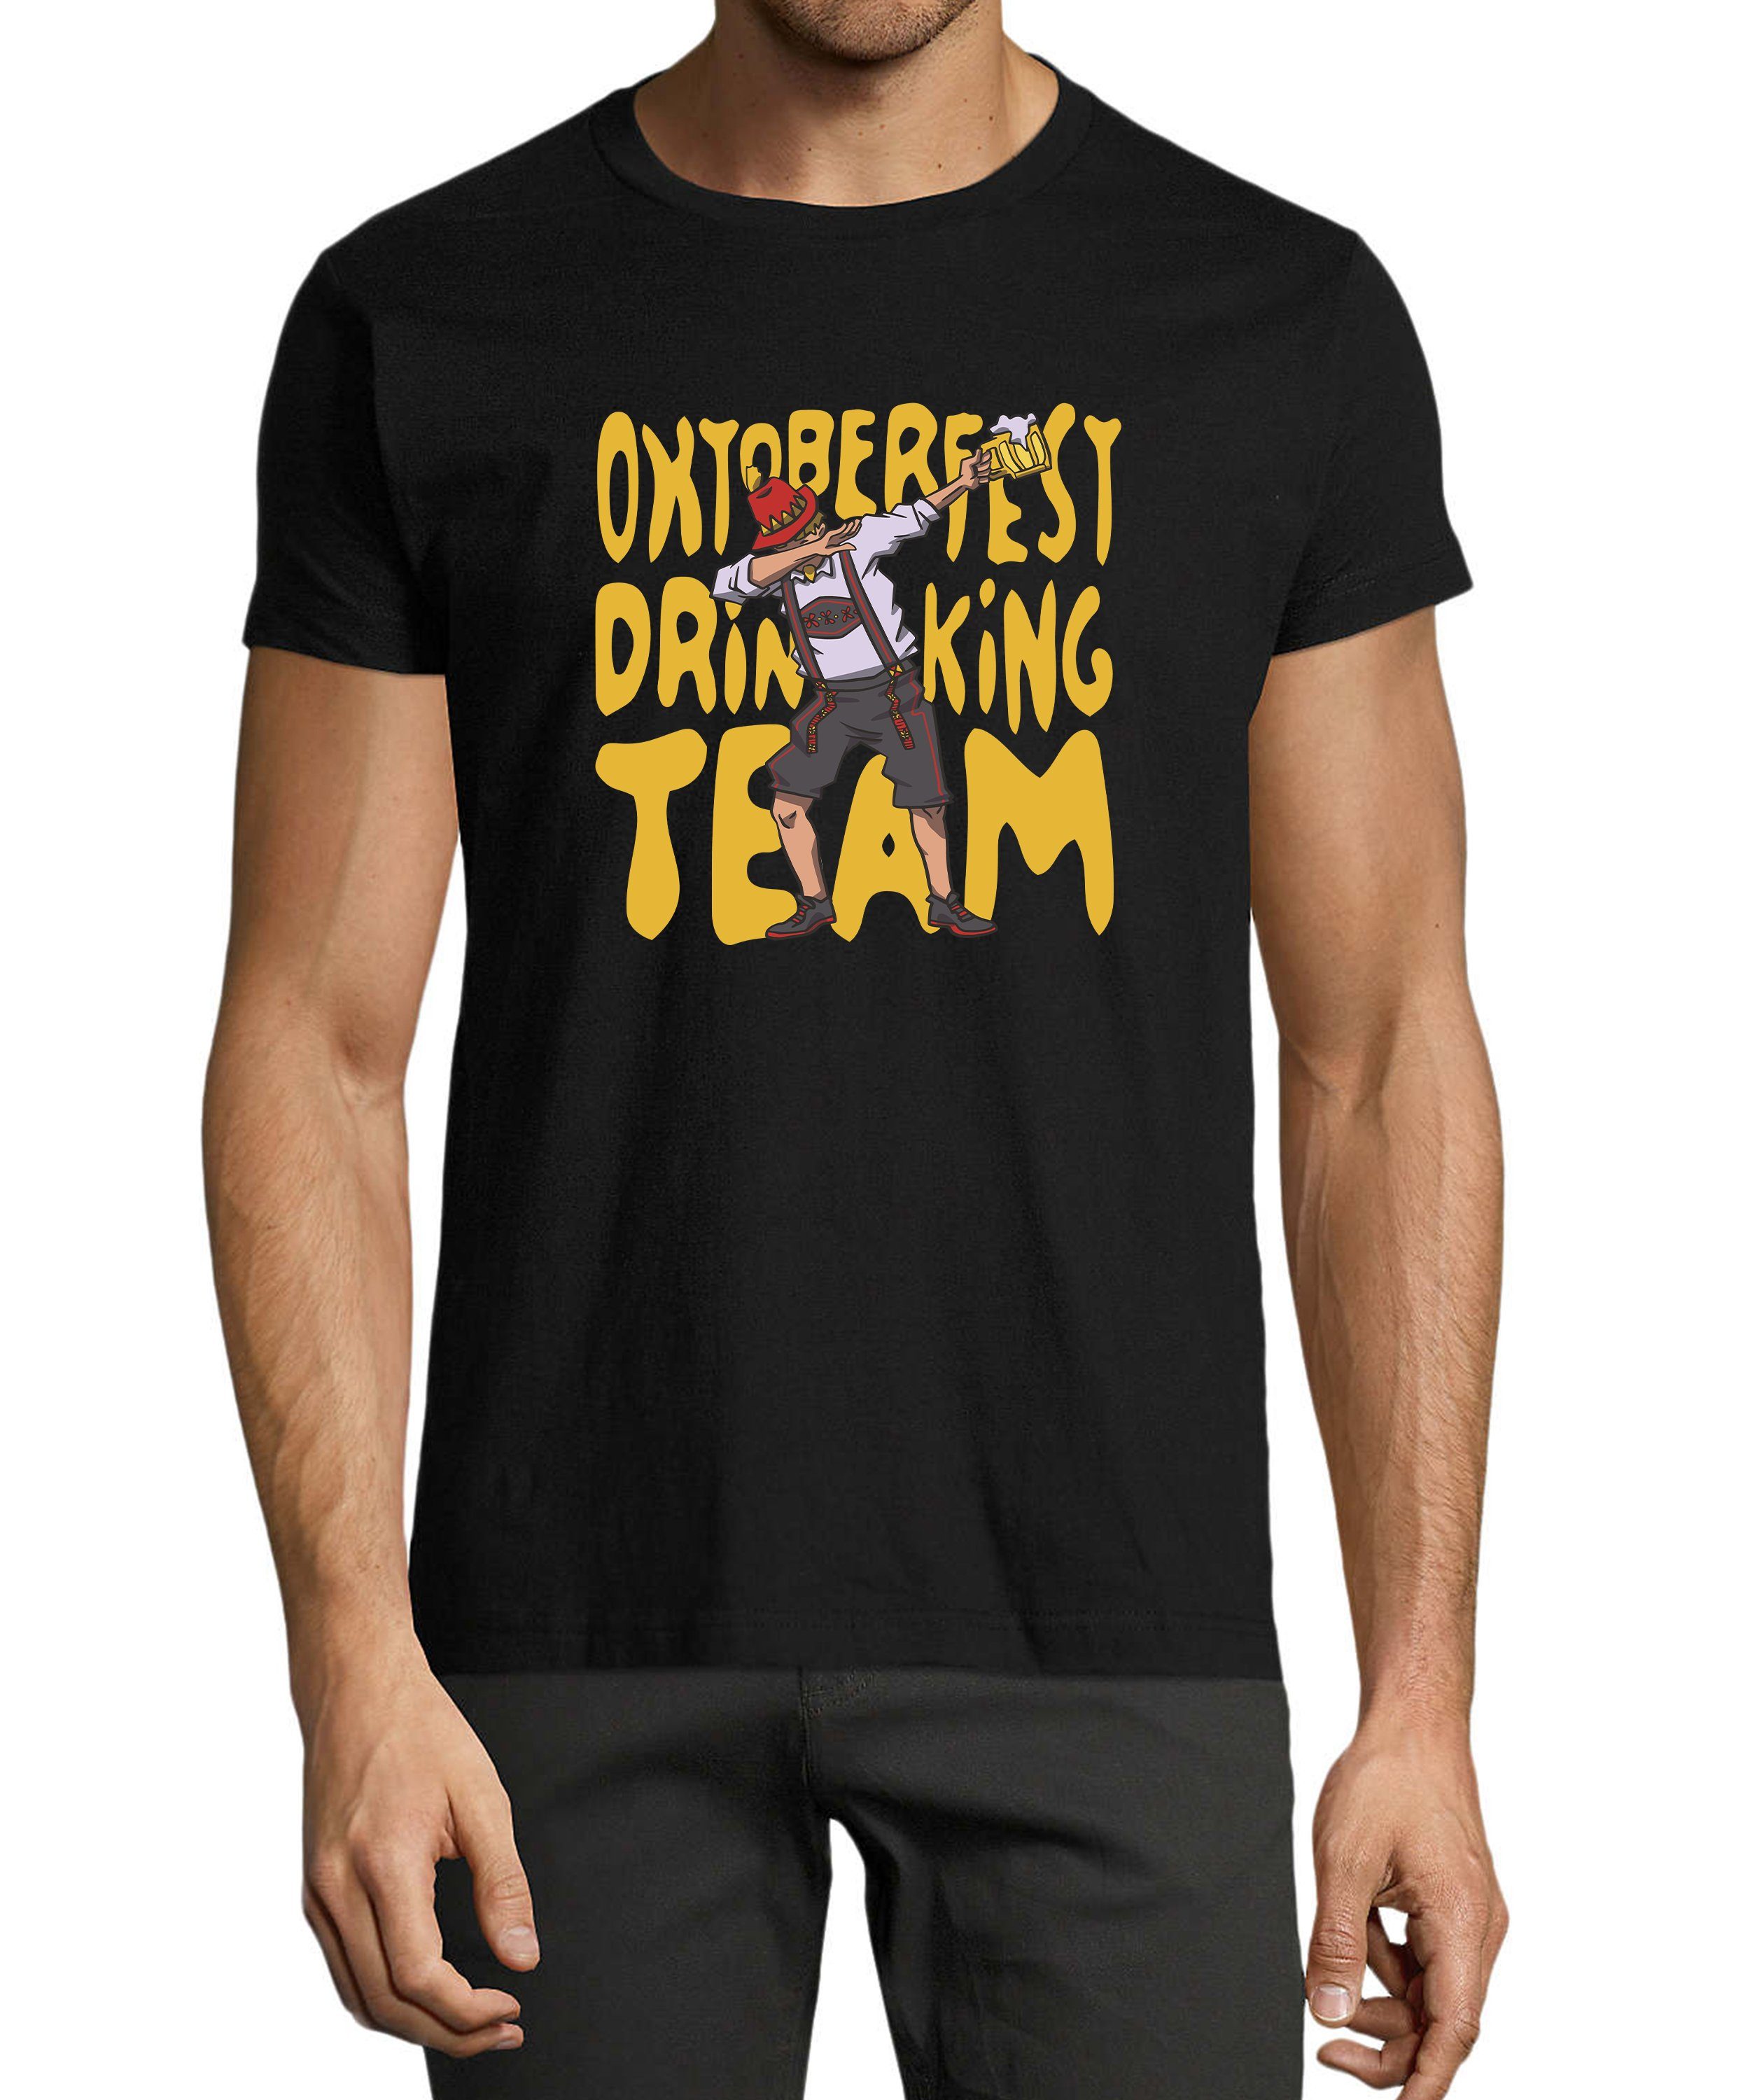 MyDesign24 T-Shirt Herren - Aufdruck Regular schwarz Fit, mit Oktoberfest Team Drinking Shirt Baumwollshirt i305 Print T-Shirt Fun